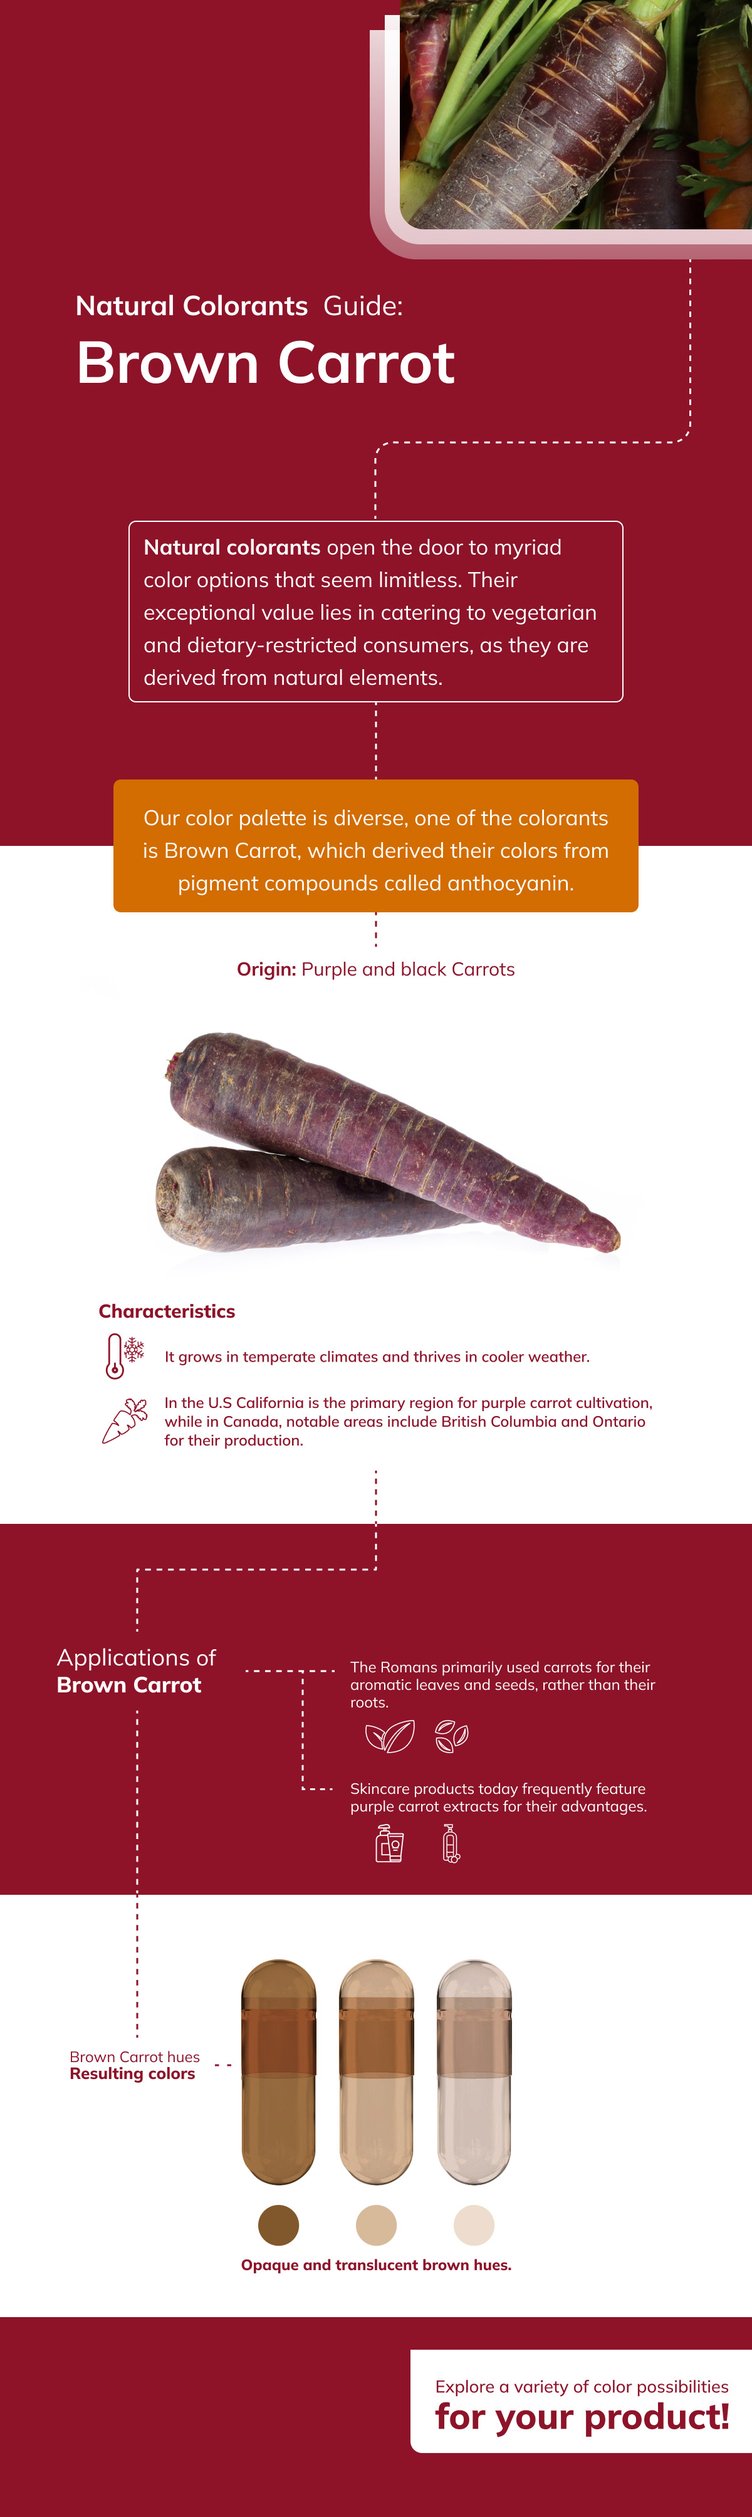 Brown Carrot natural colorant dye